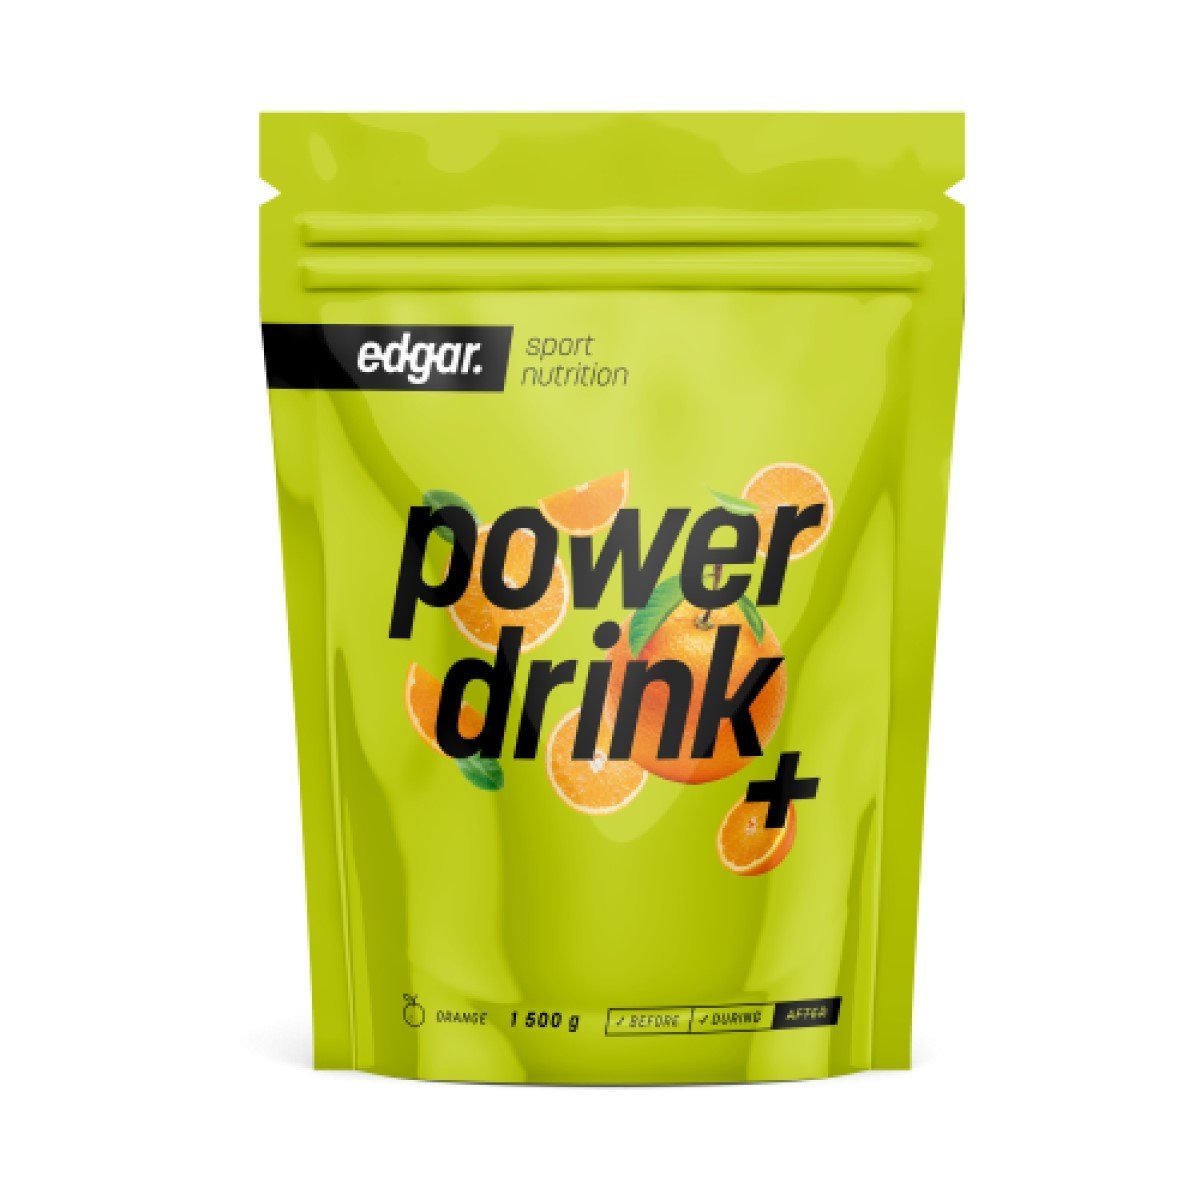 Powerdrink Edgar +, 100 g, pomaranč